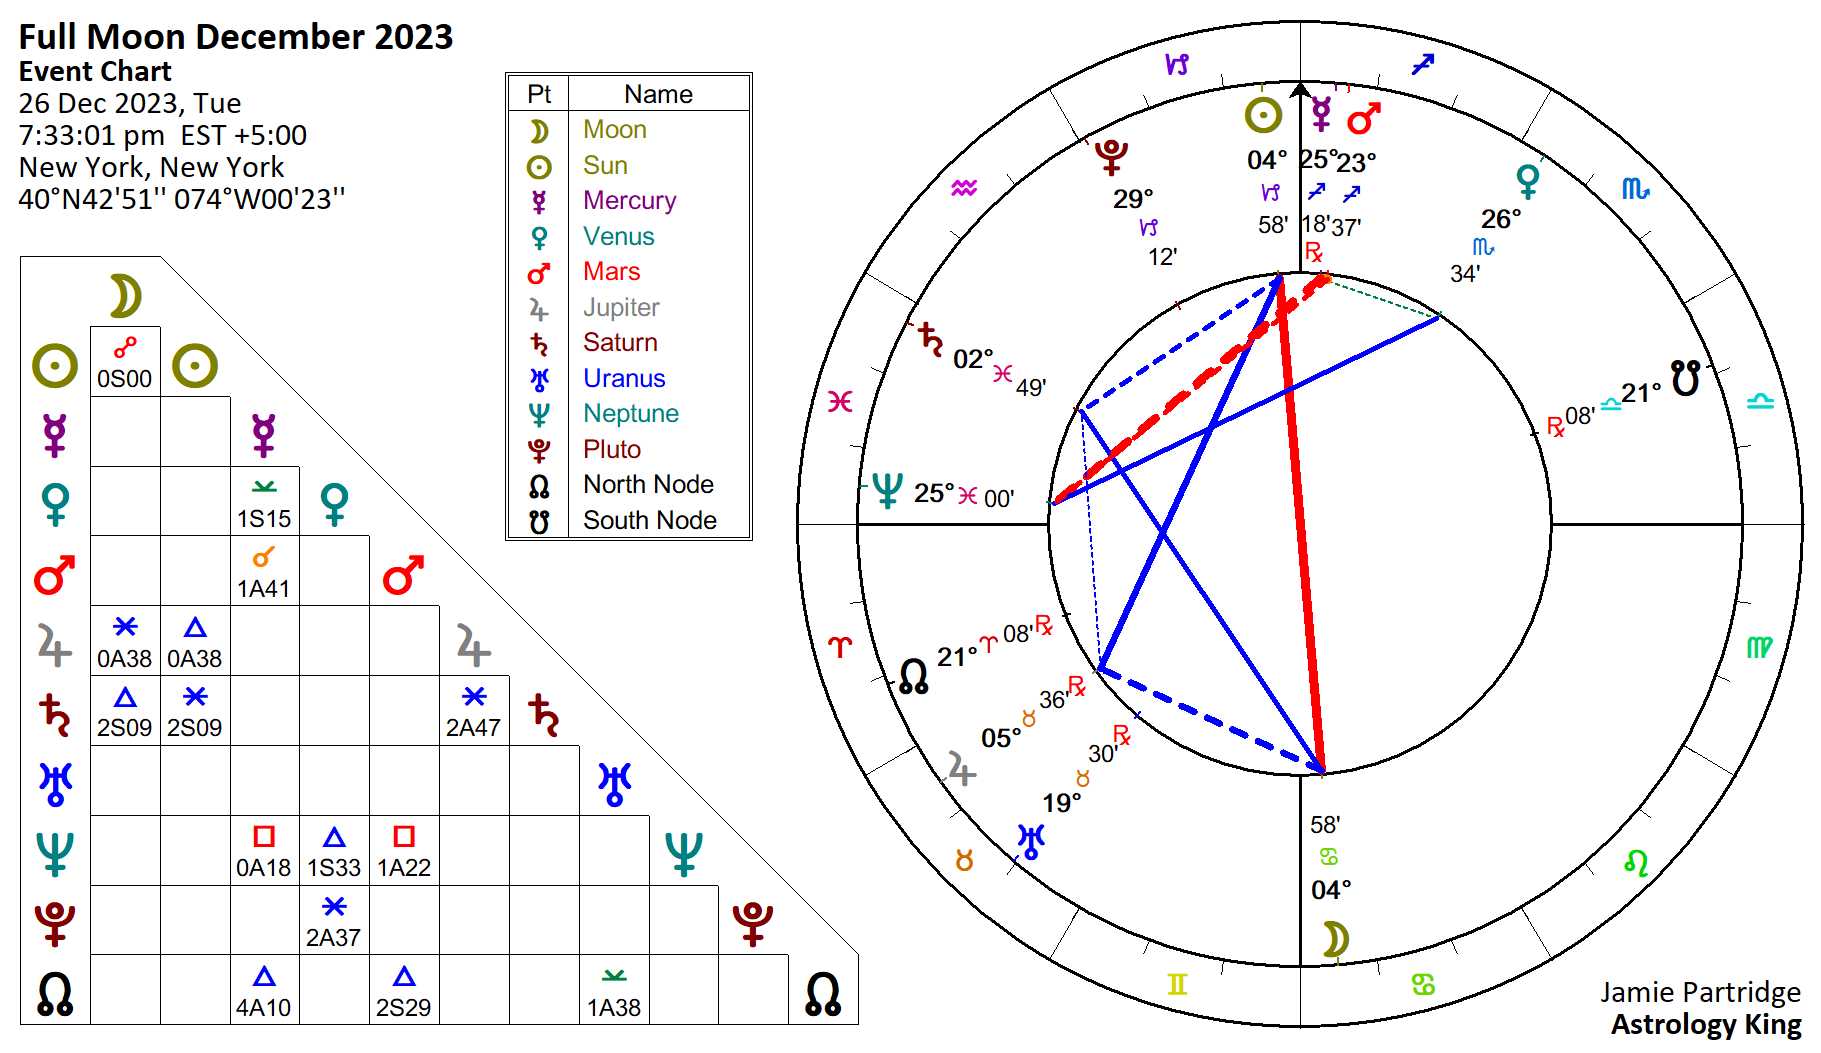 Full Moon December 2023 in Cancer Astrology King